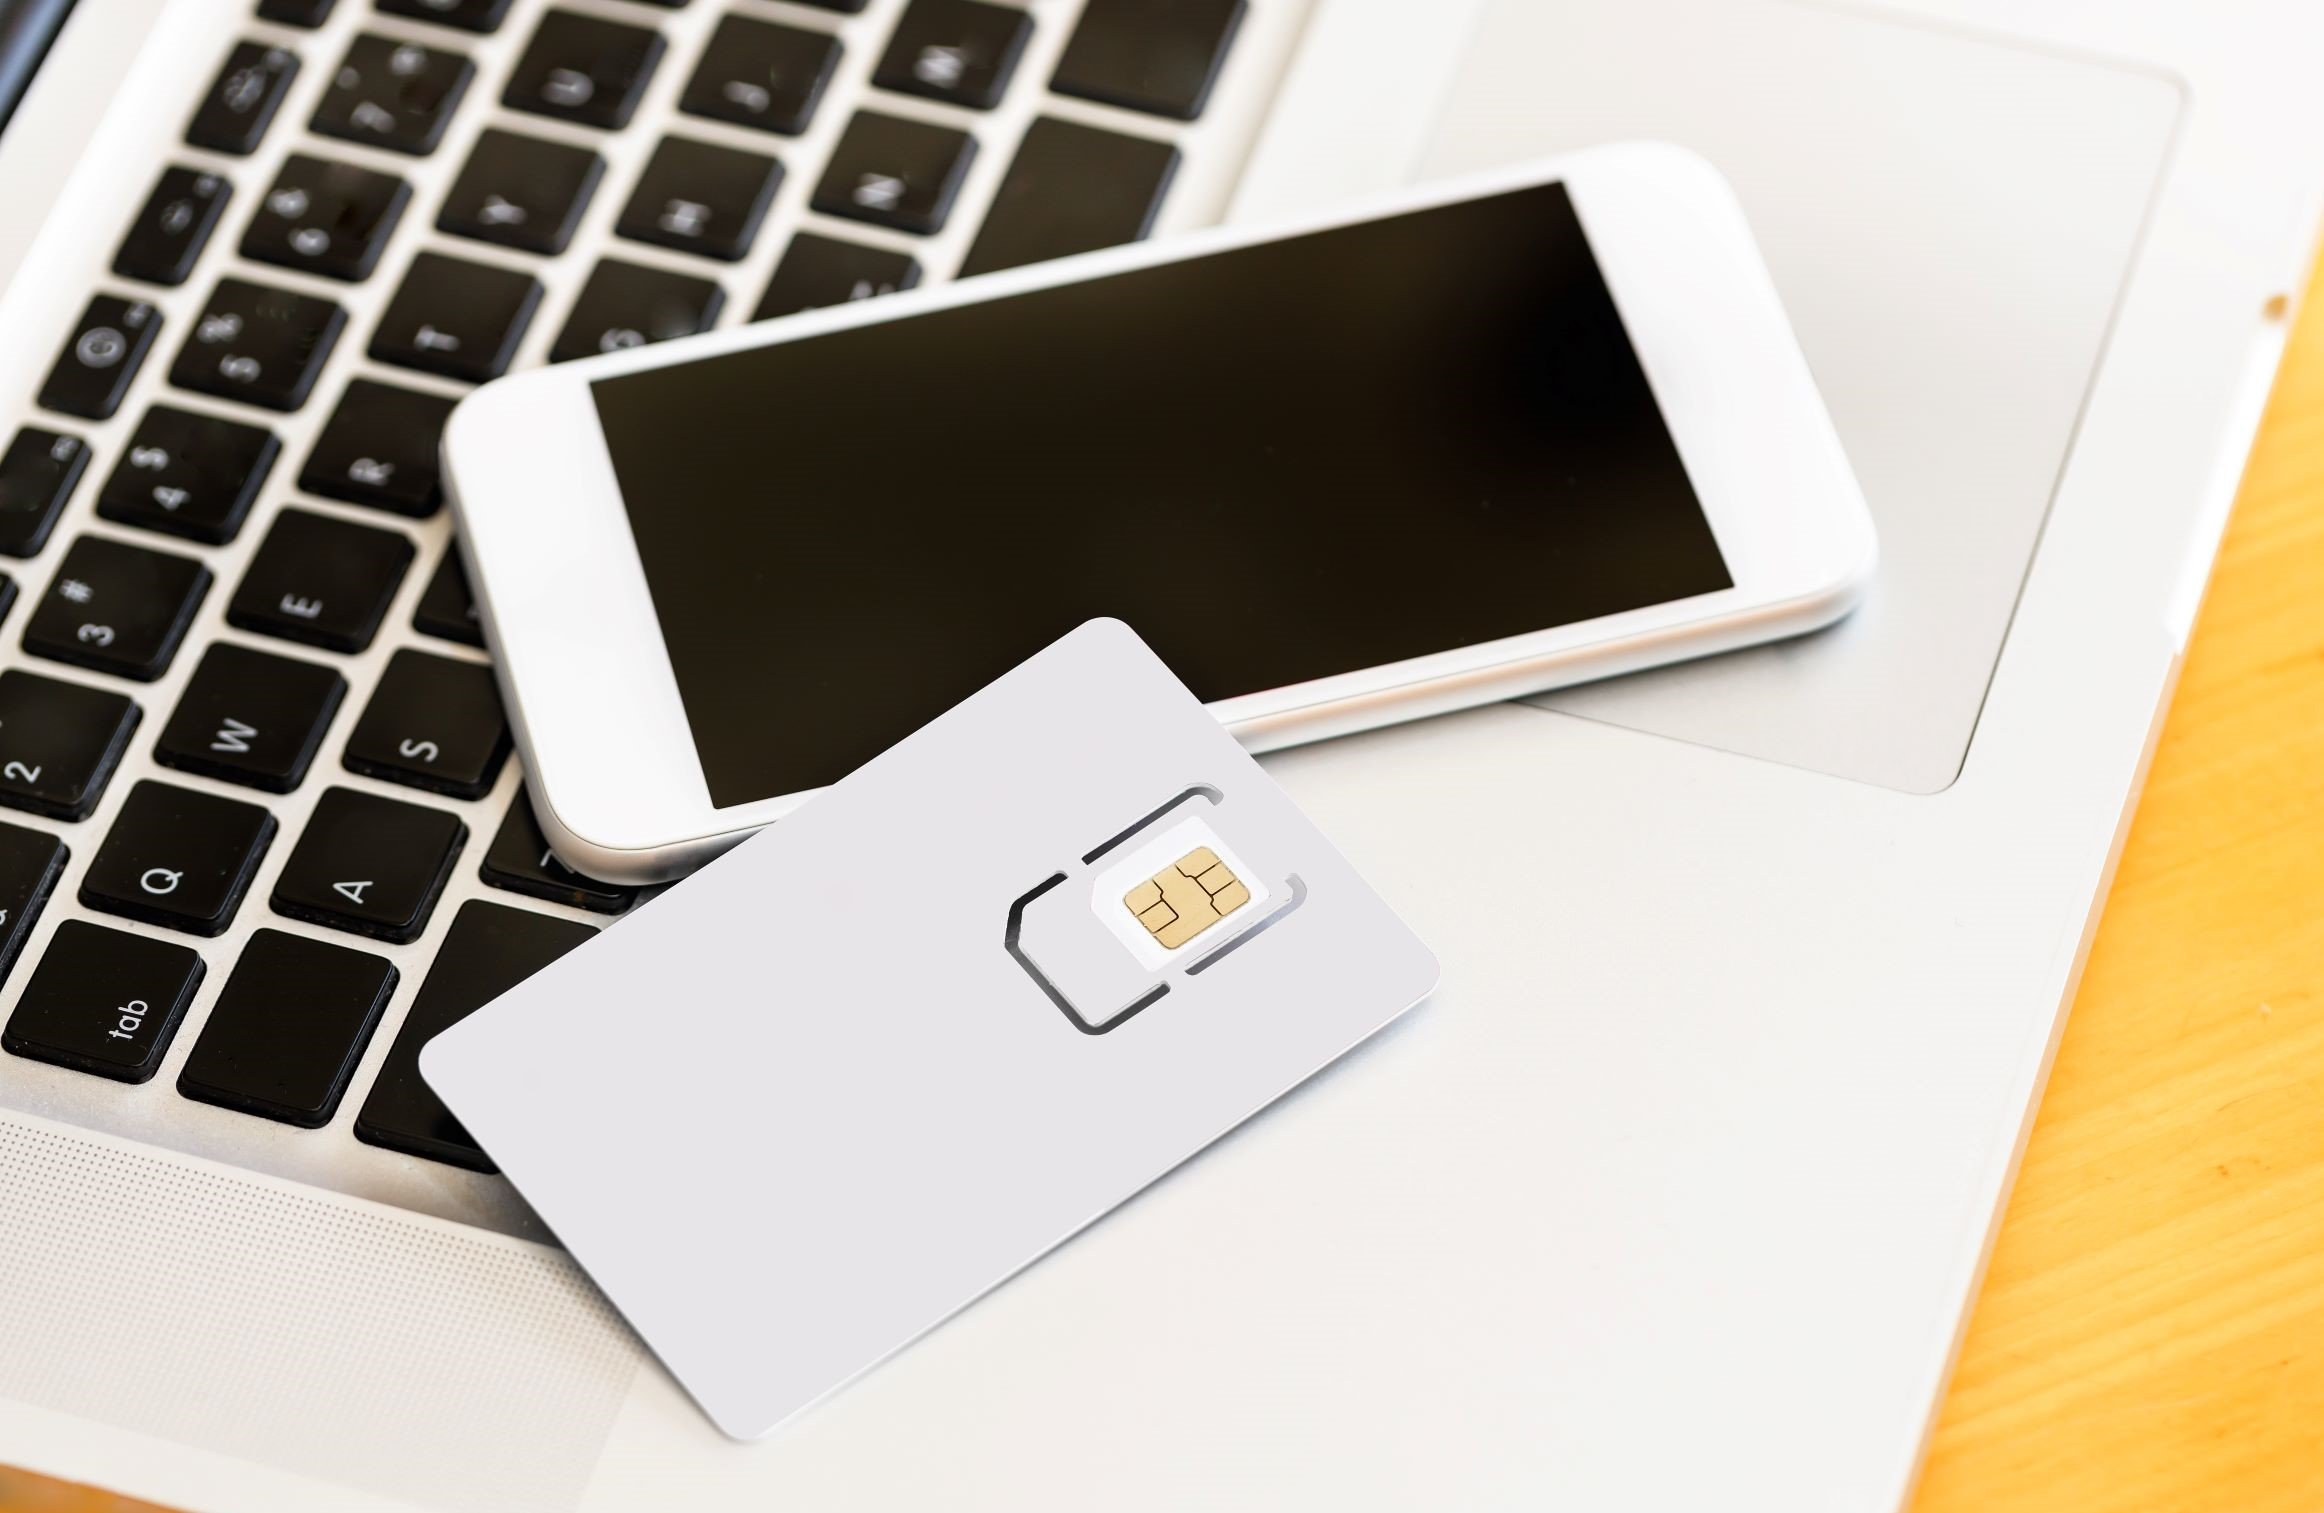 iPhone and SIM card on a keyboard